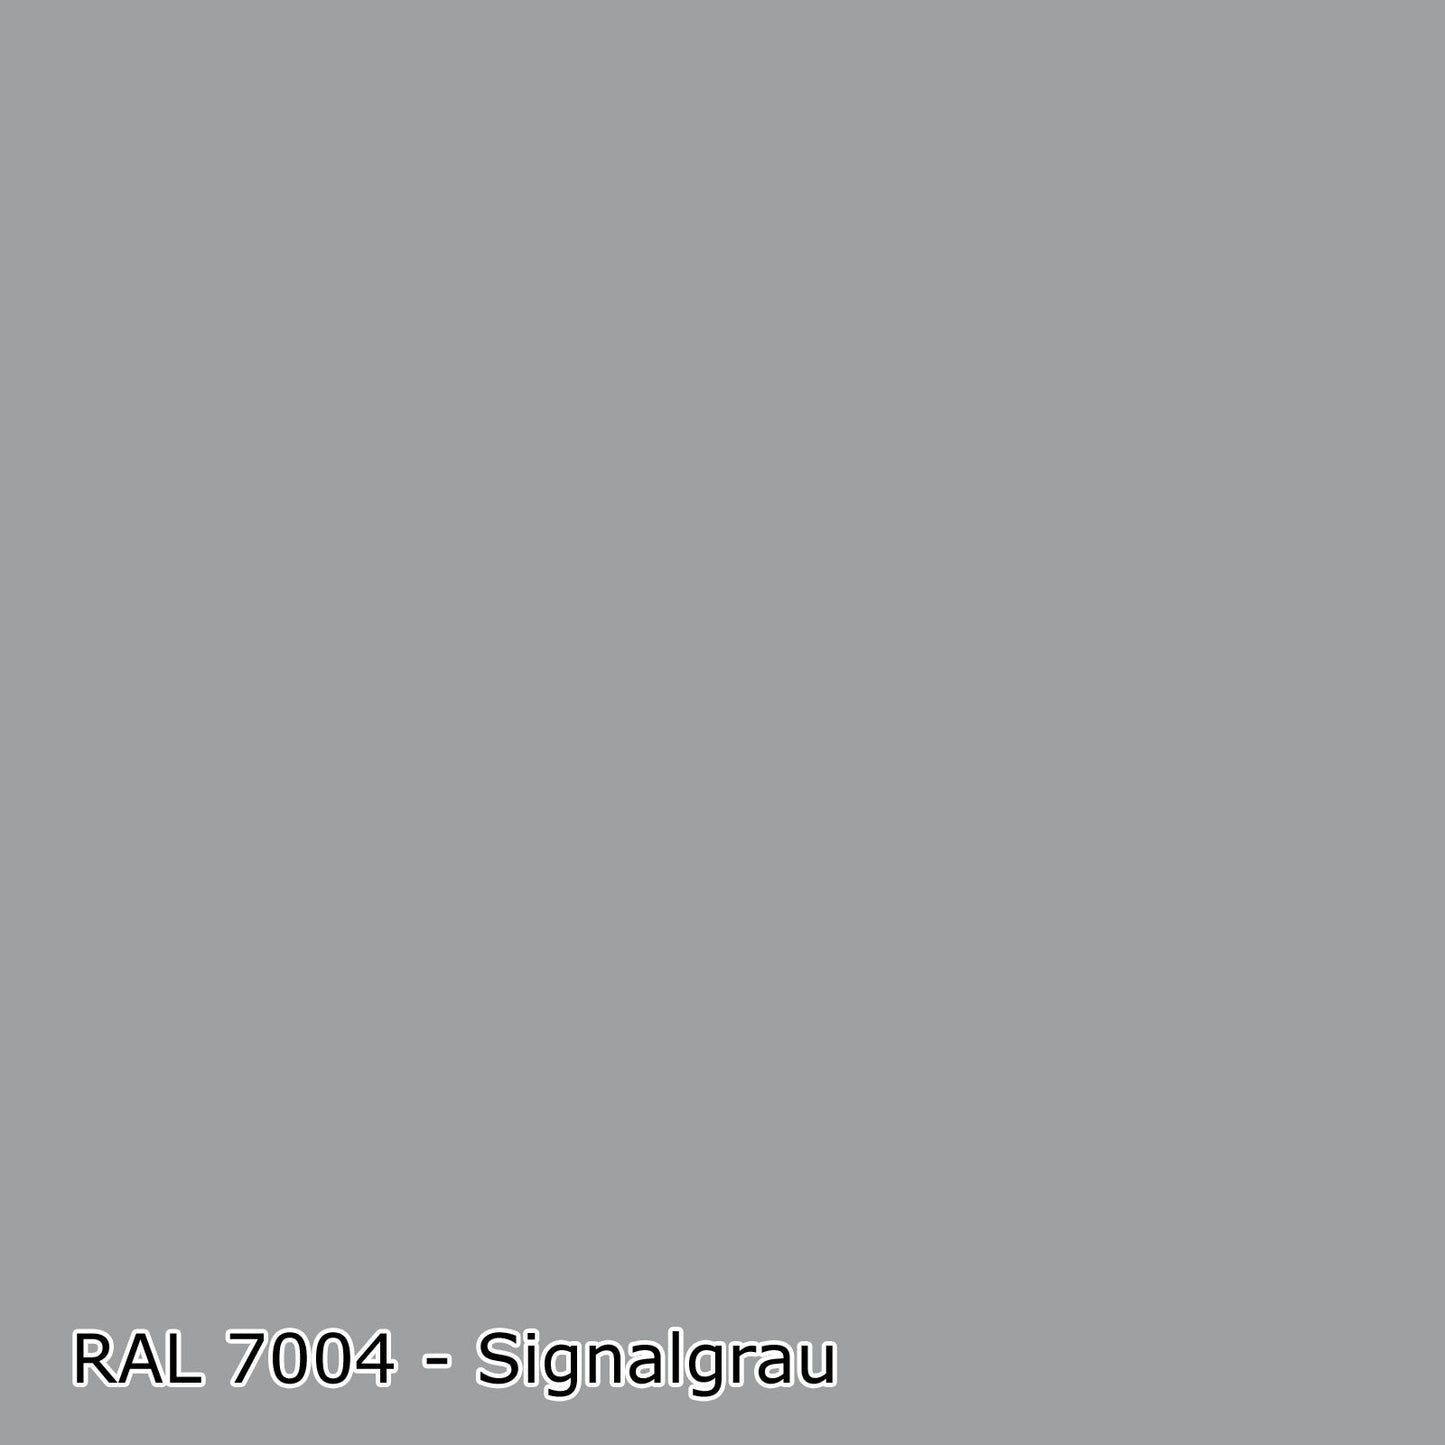 1 L Buntlack auf Wasserbasis, RAL Farbwahl - SEIDENMATT (RAL 6008 - 9018)